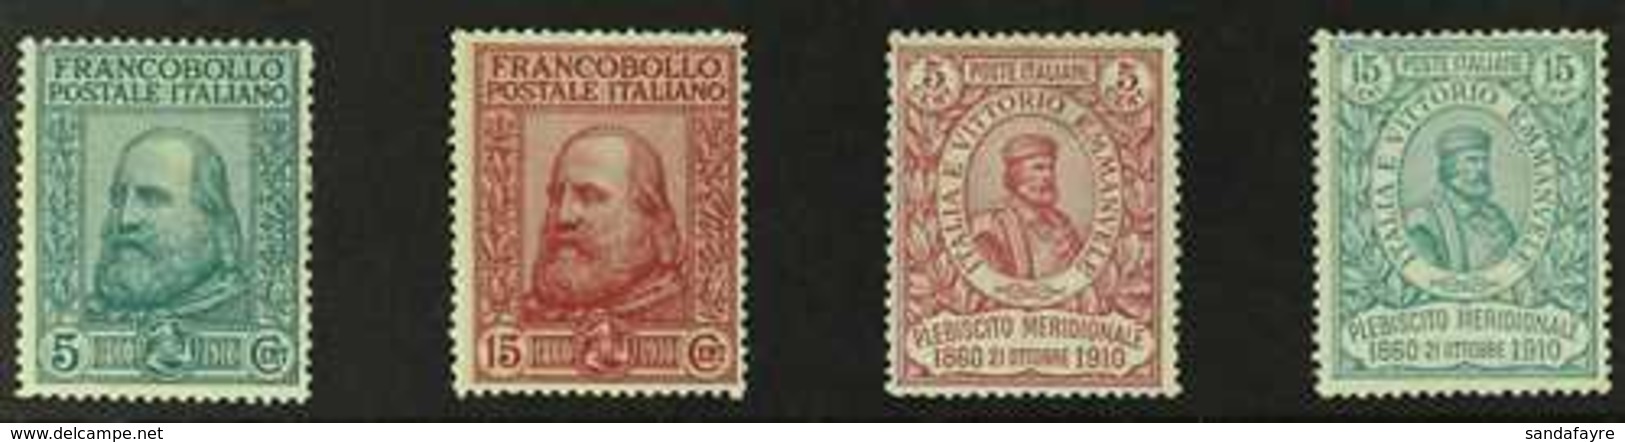 1910 50th Anniversary Of Plebiscite (Garibaldi) Complete Set (Sass S. 13, Scott 115/18, SG 81/84), Never Hinged Mint. Lo - Non Classés